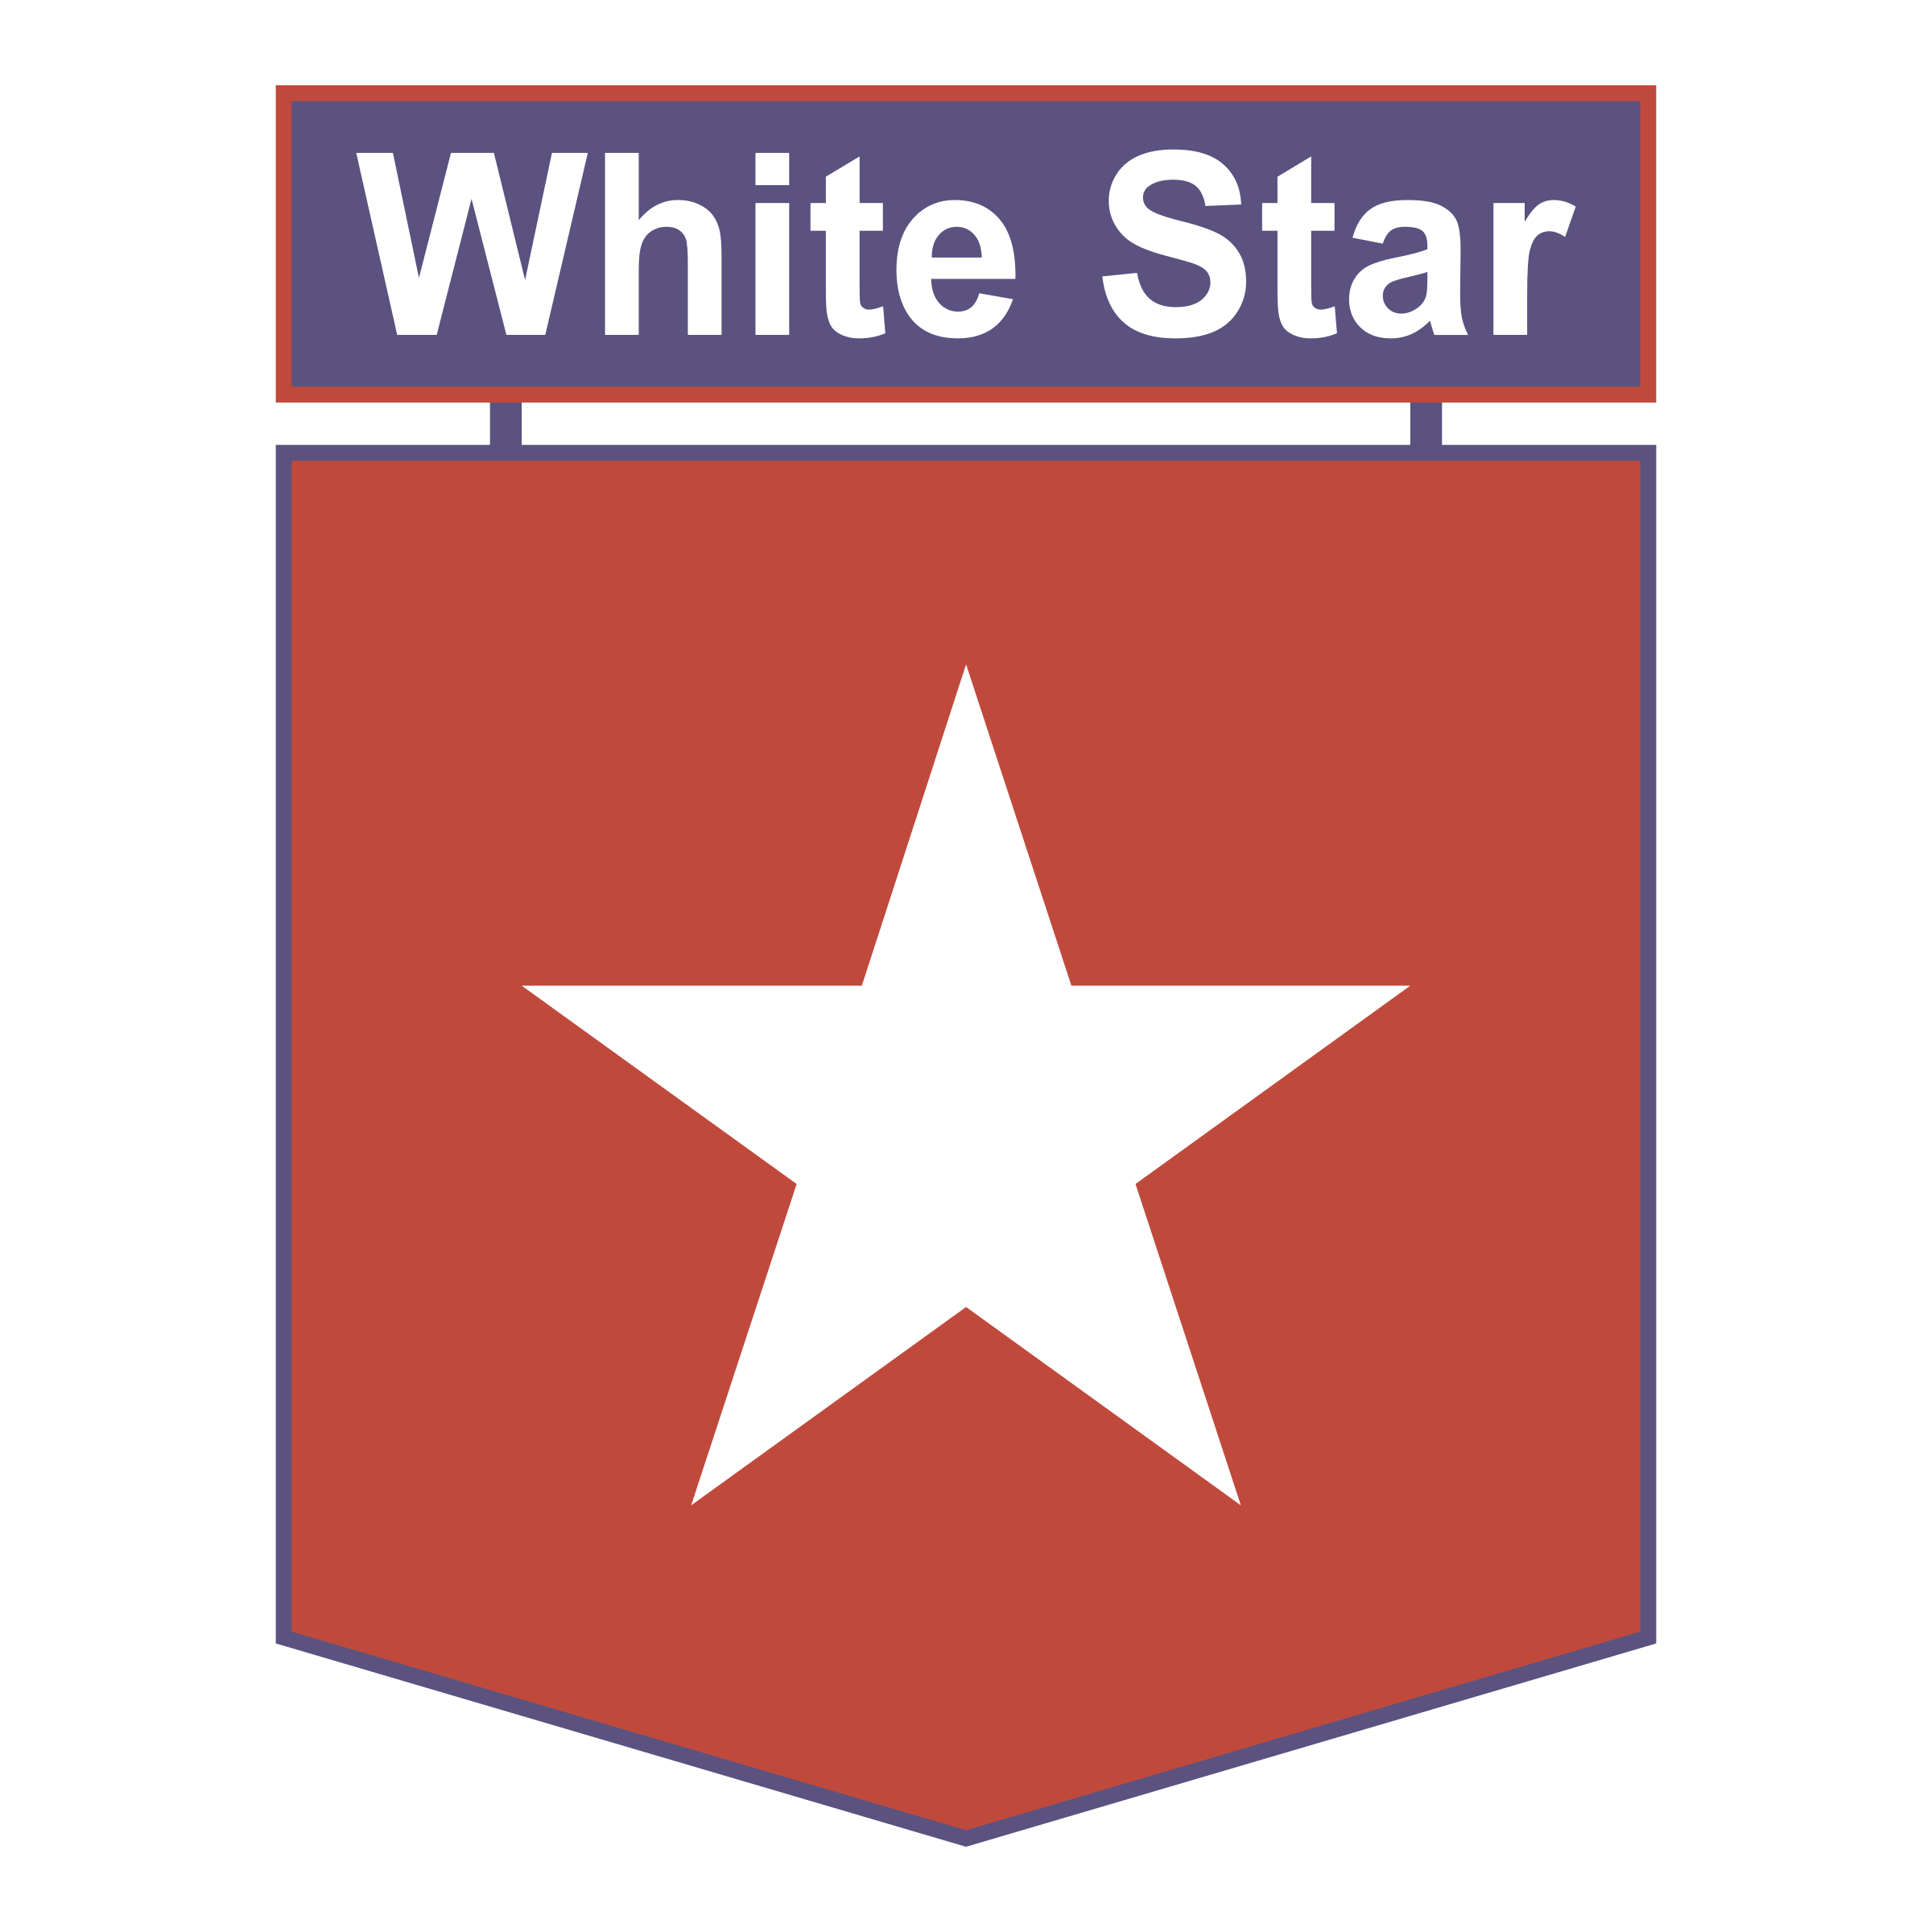 Логотип звезда. White Star логотип. Белая звезда. Флаг Китая. Wait star